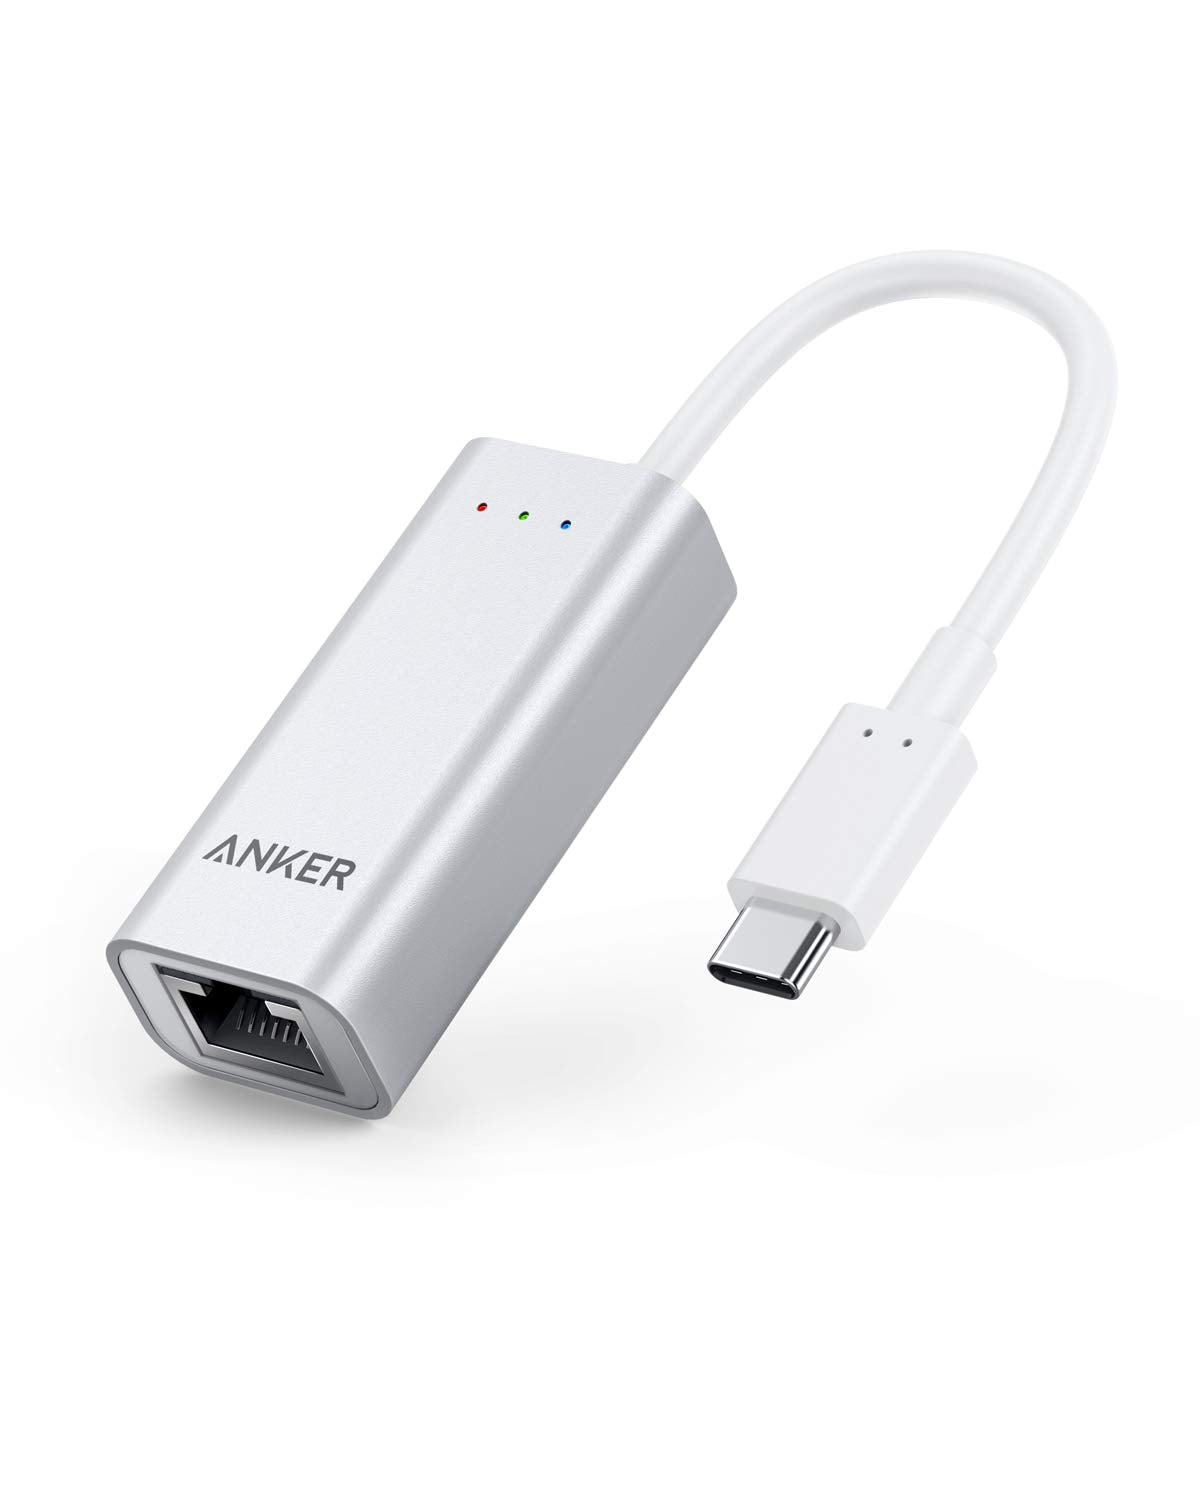 USB-C Ethernet Adapter 3 USB C Hub to Ethernet RJ45 Lan Adapter Network  Card Gigabit Internet for Macbook Pro Air Type C Hub